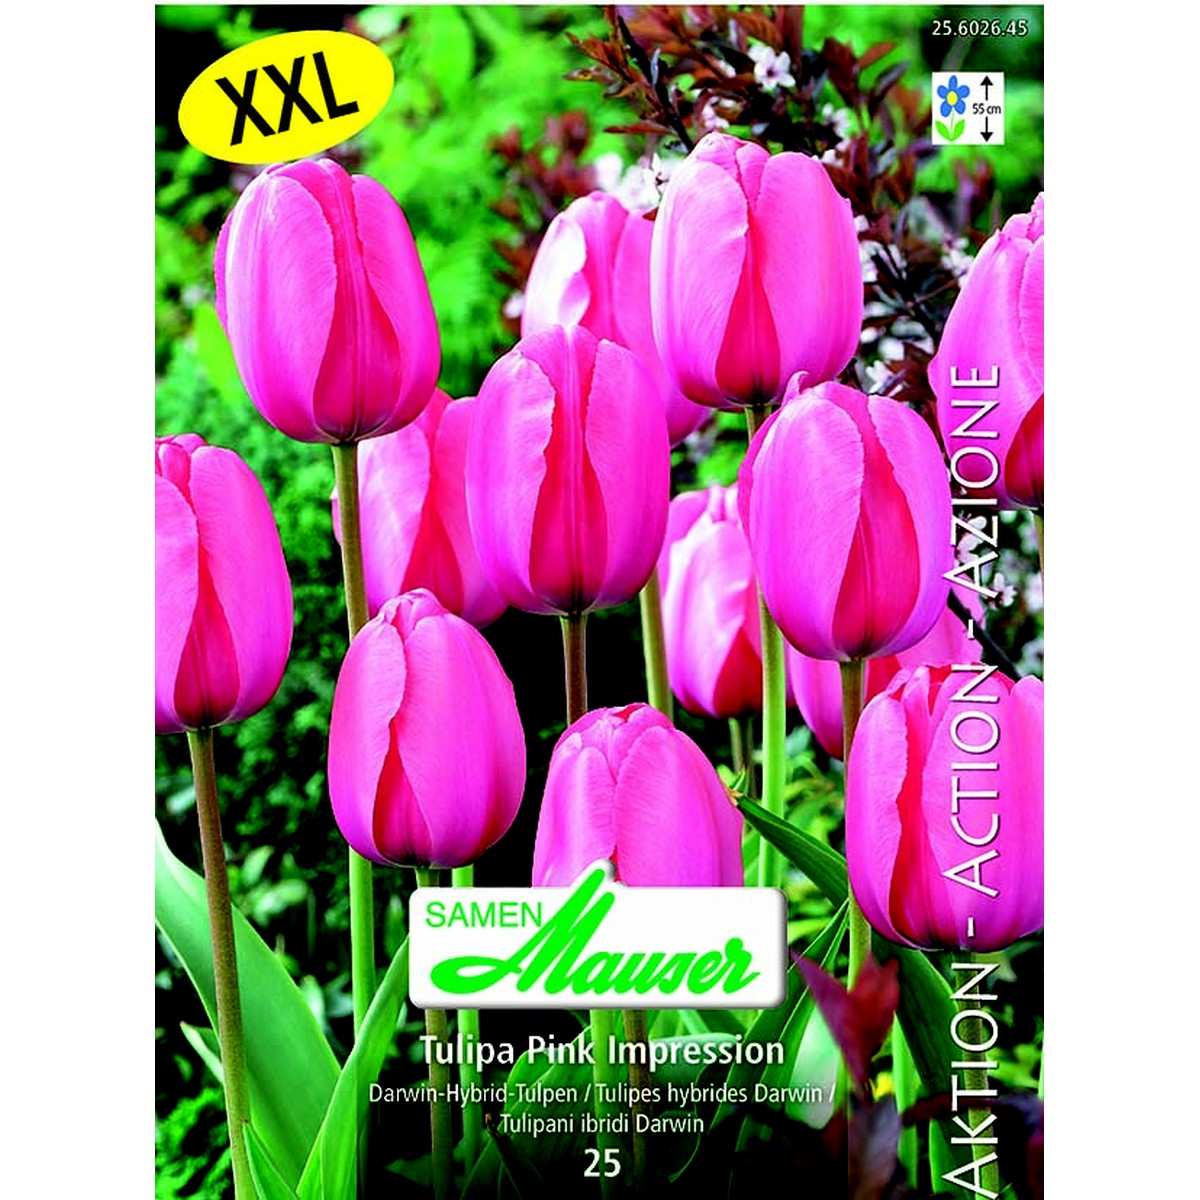   Tulipe THD Pink Impression 25  14/